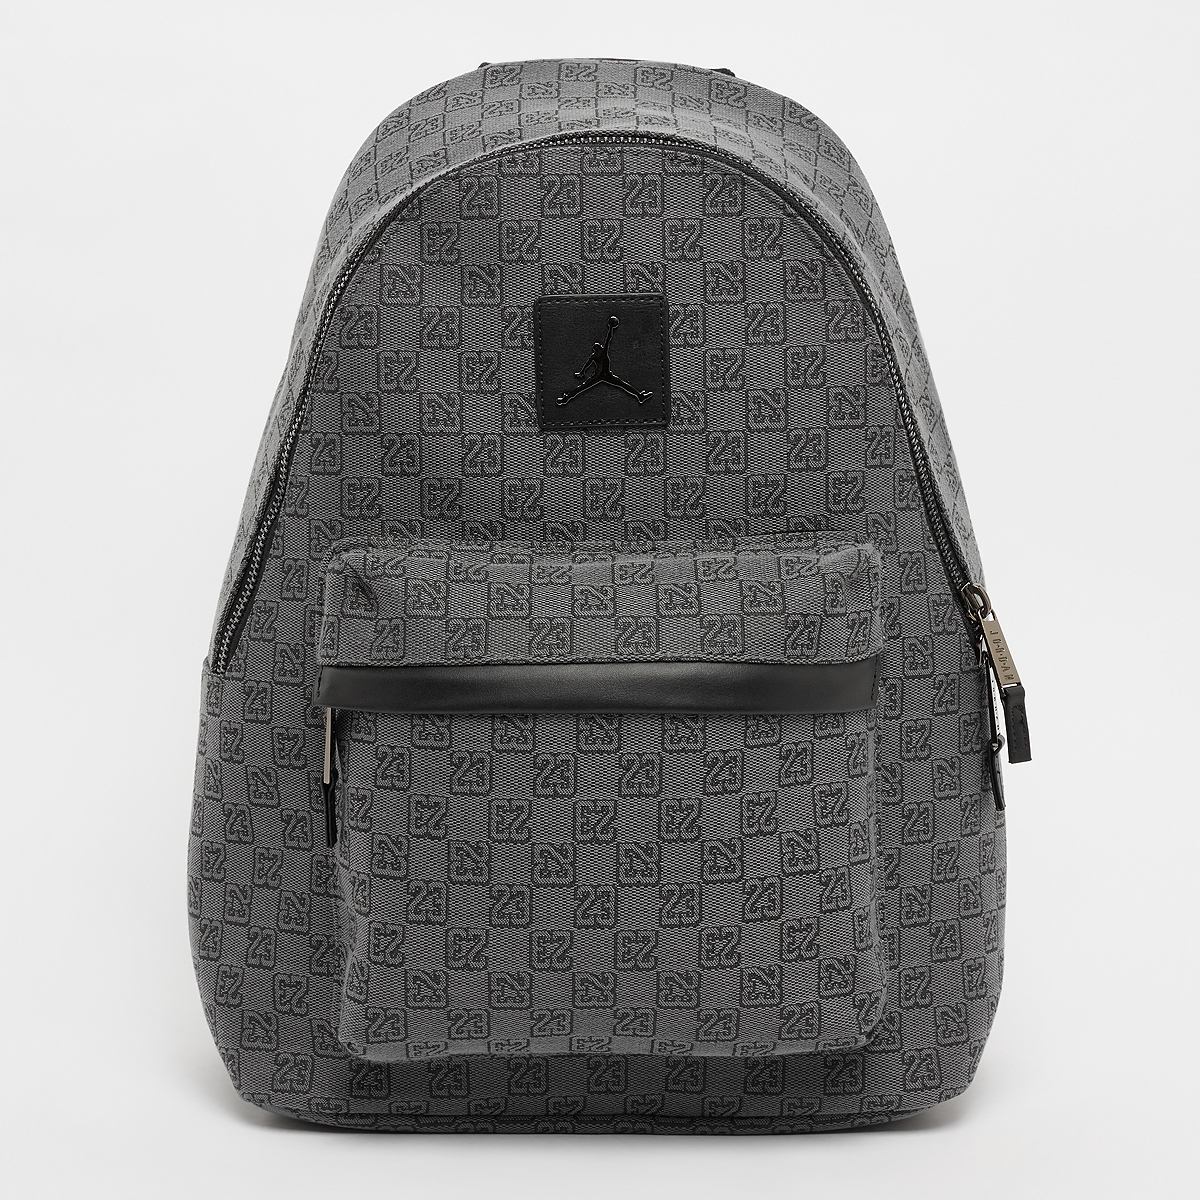 Jam Monogram Backpack, JORDAN, Bags, smoke grey, taille: one size